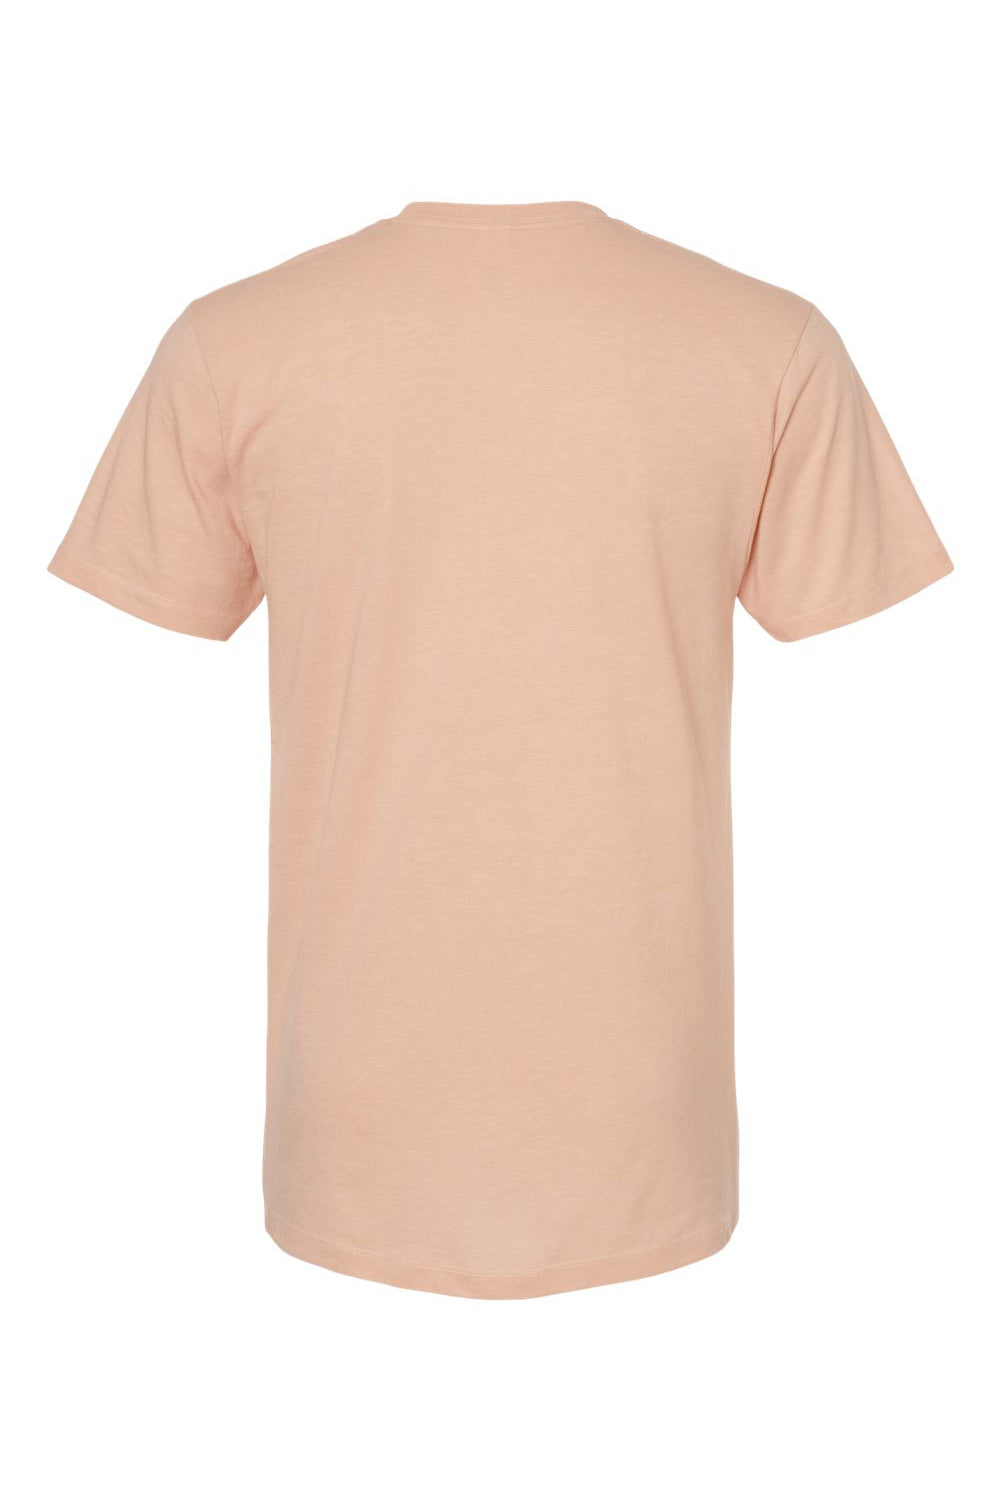 Tultex 541 Mens Premium Short Sleeve Crewneck T-Shirt Heather Peach Flat Back